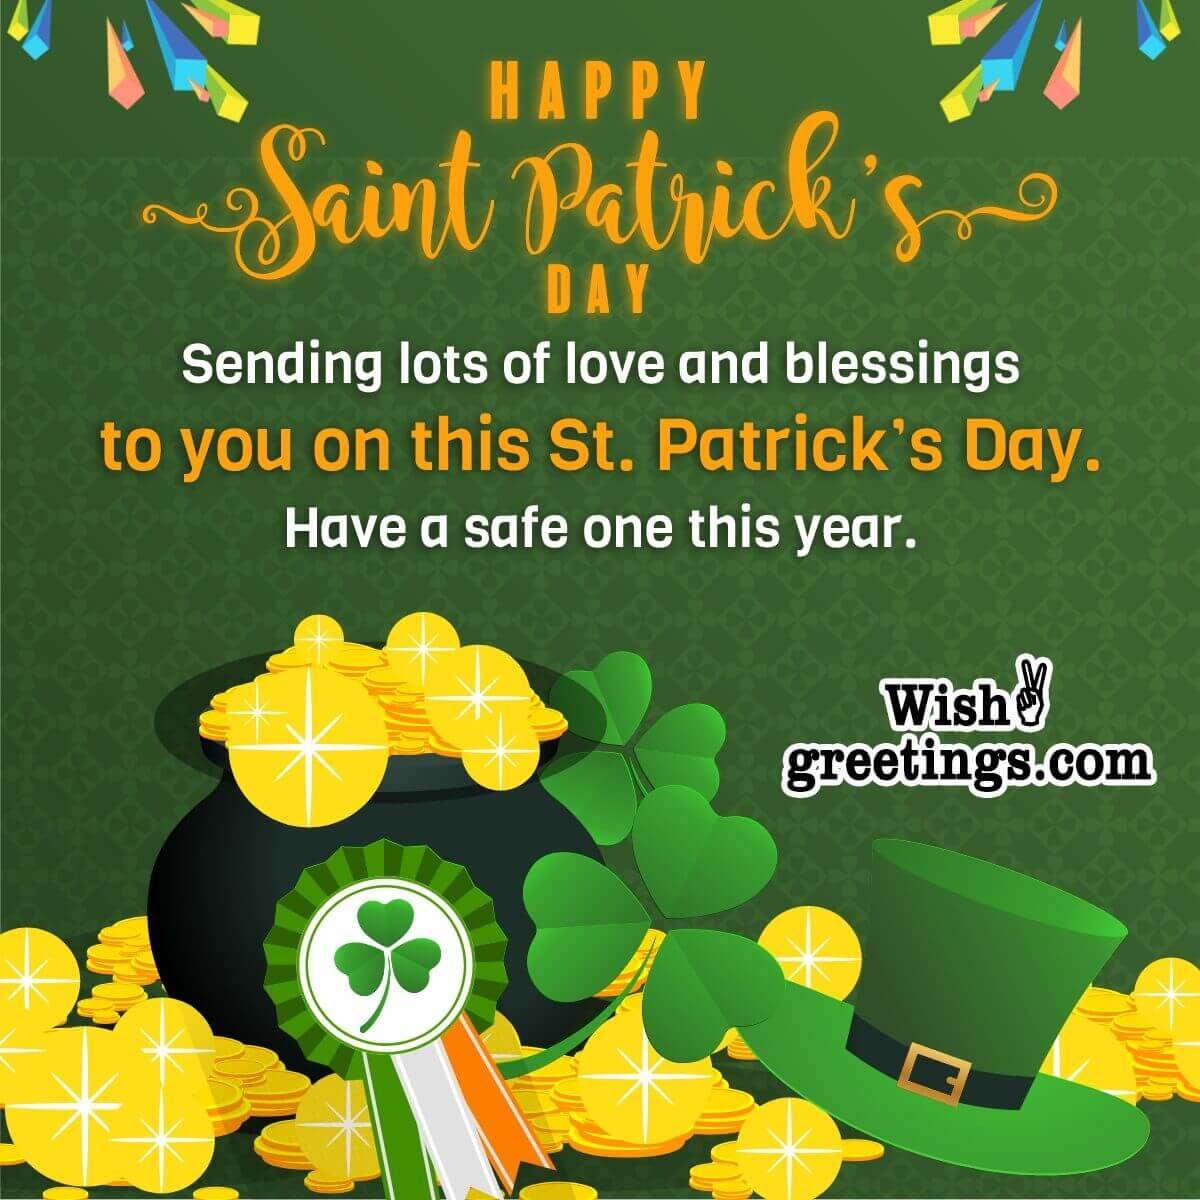 Happy Saint Patrick’s Day Greeting Image